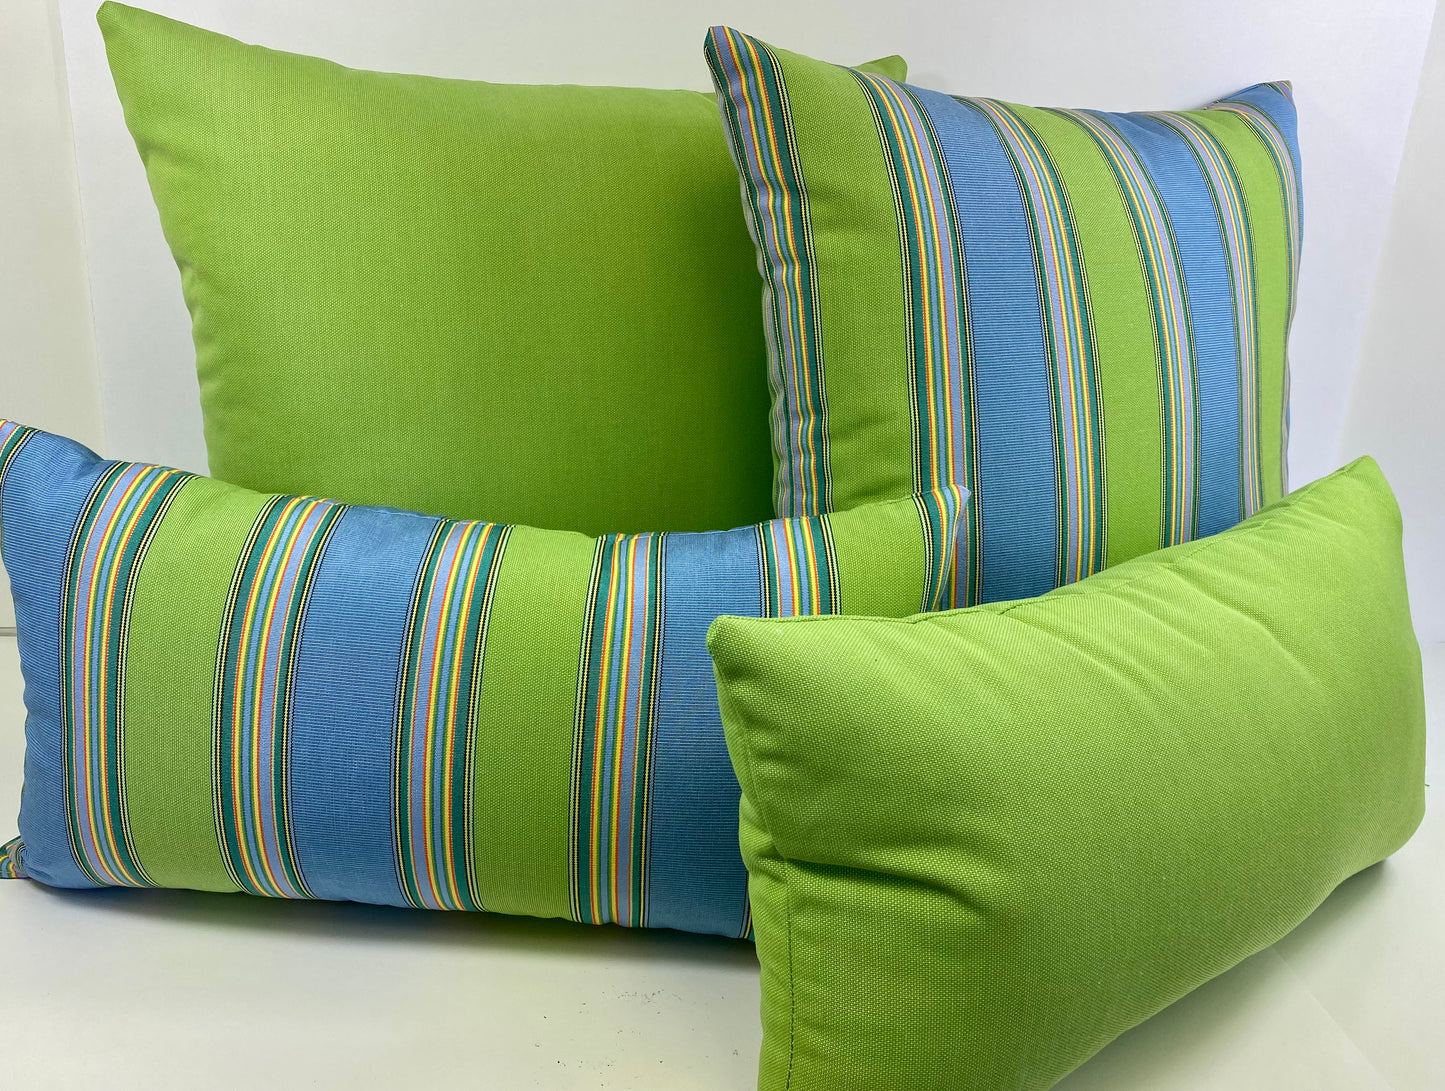 Luxury Outdoor Pillow - 22" x 22" - Newport - Lawn; Sunbrella, or equivalent, with fibre fill